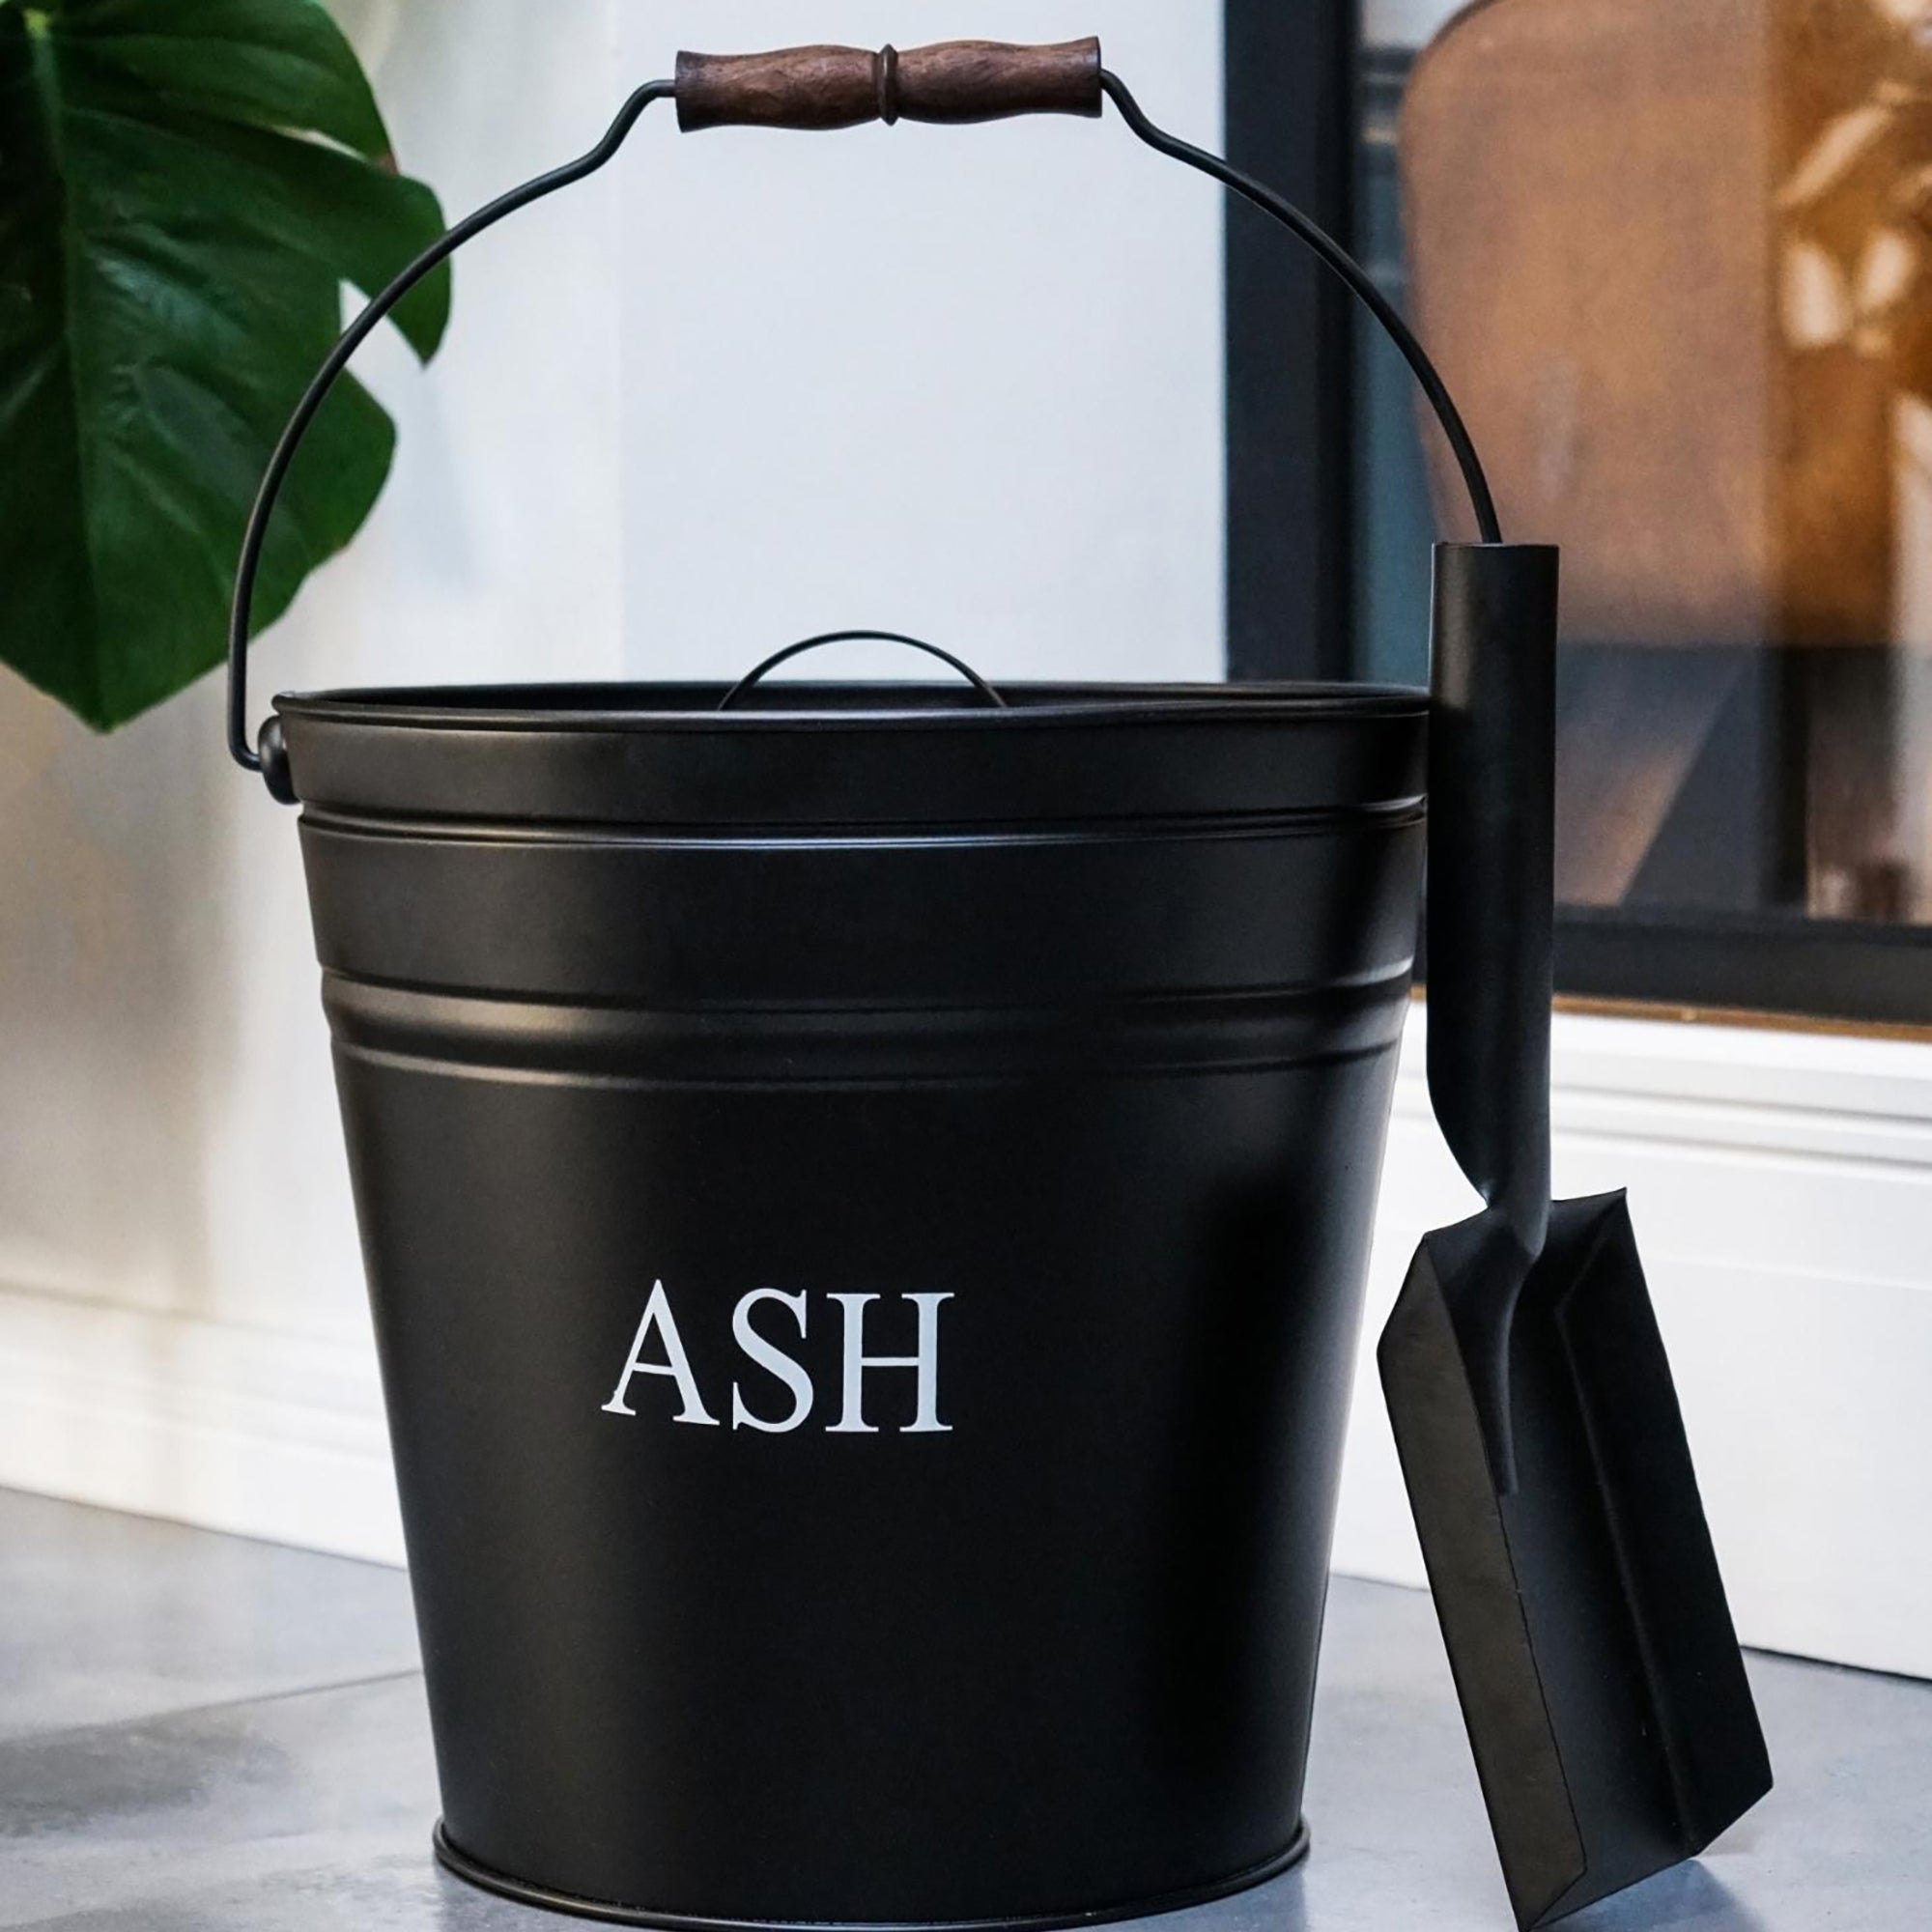 Black Ash Bucket With Shovel